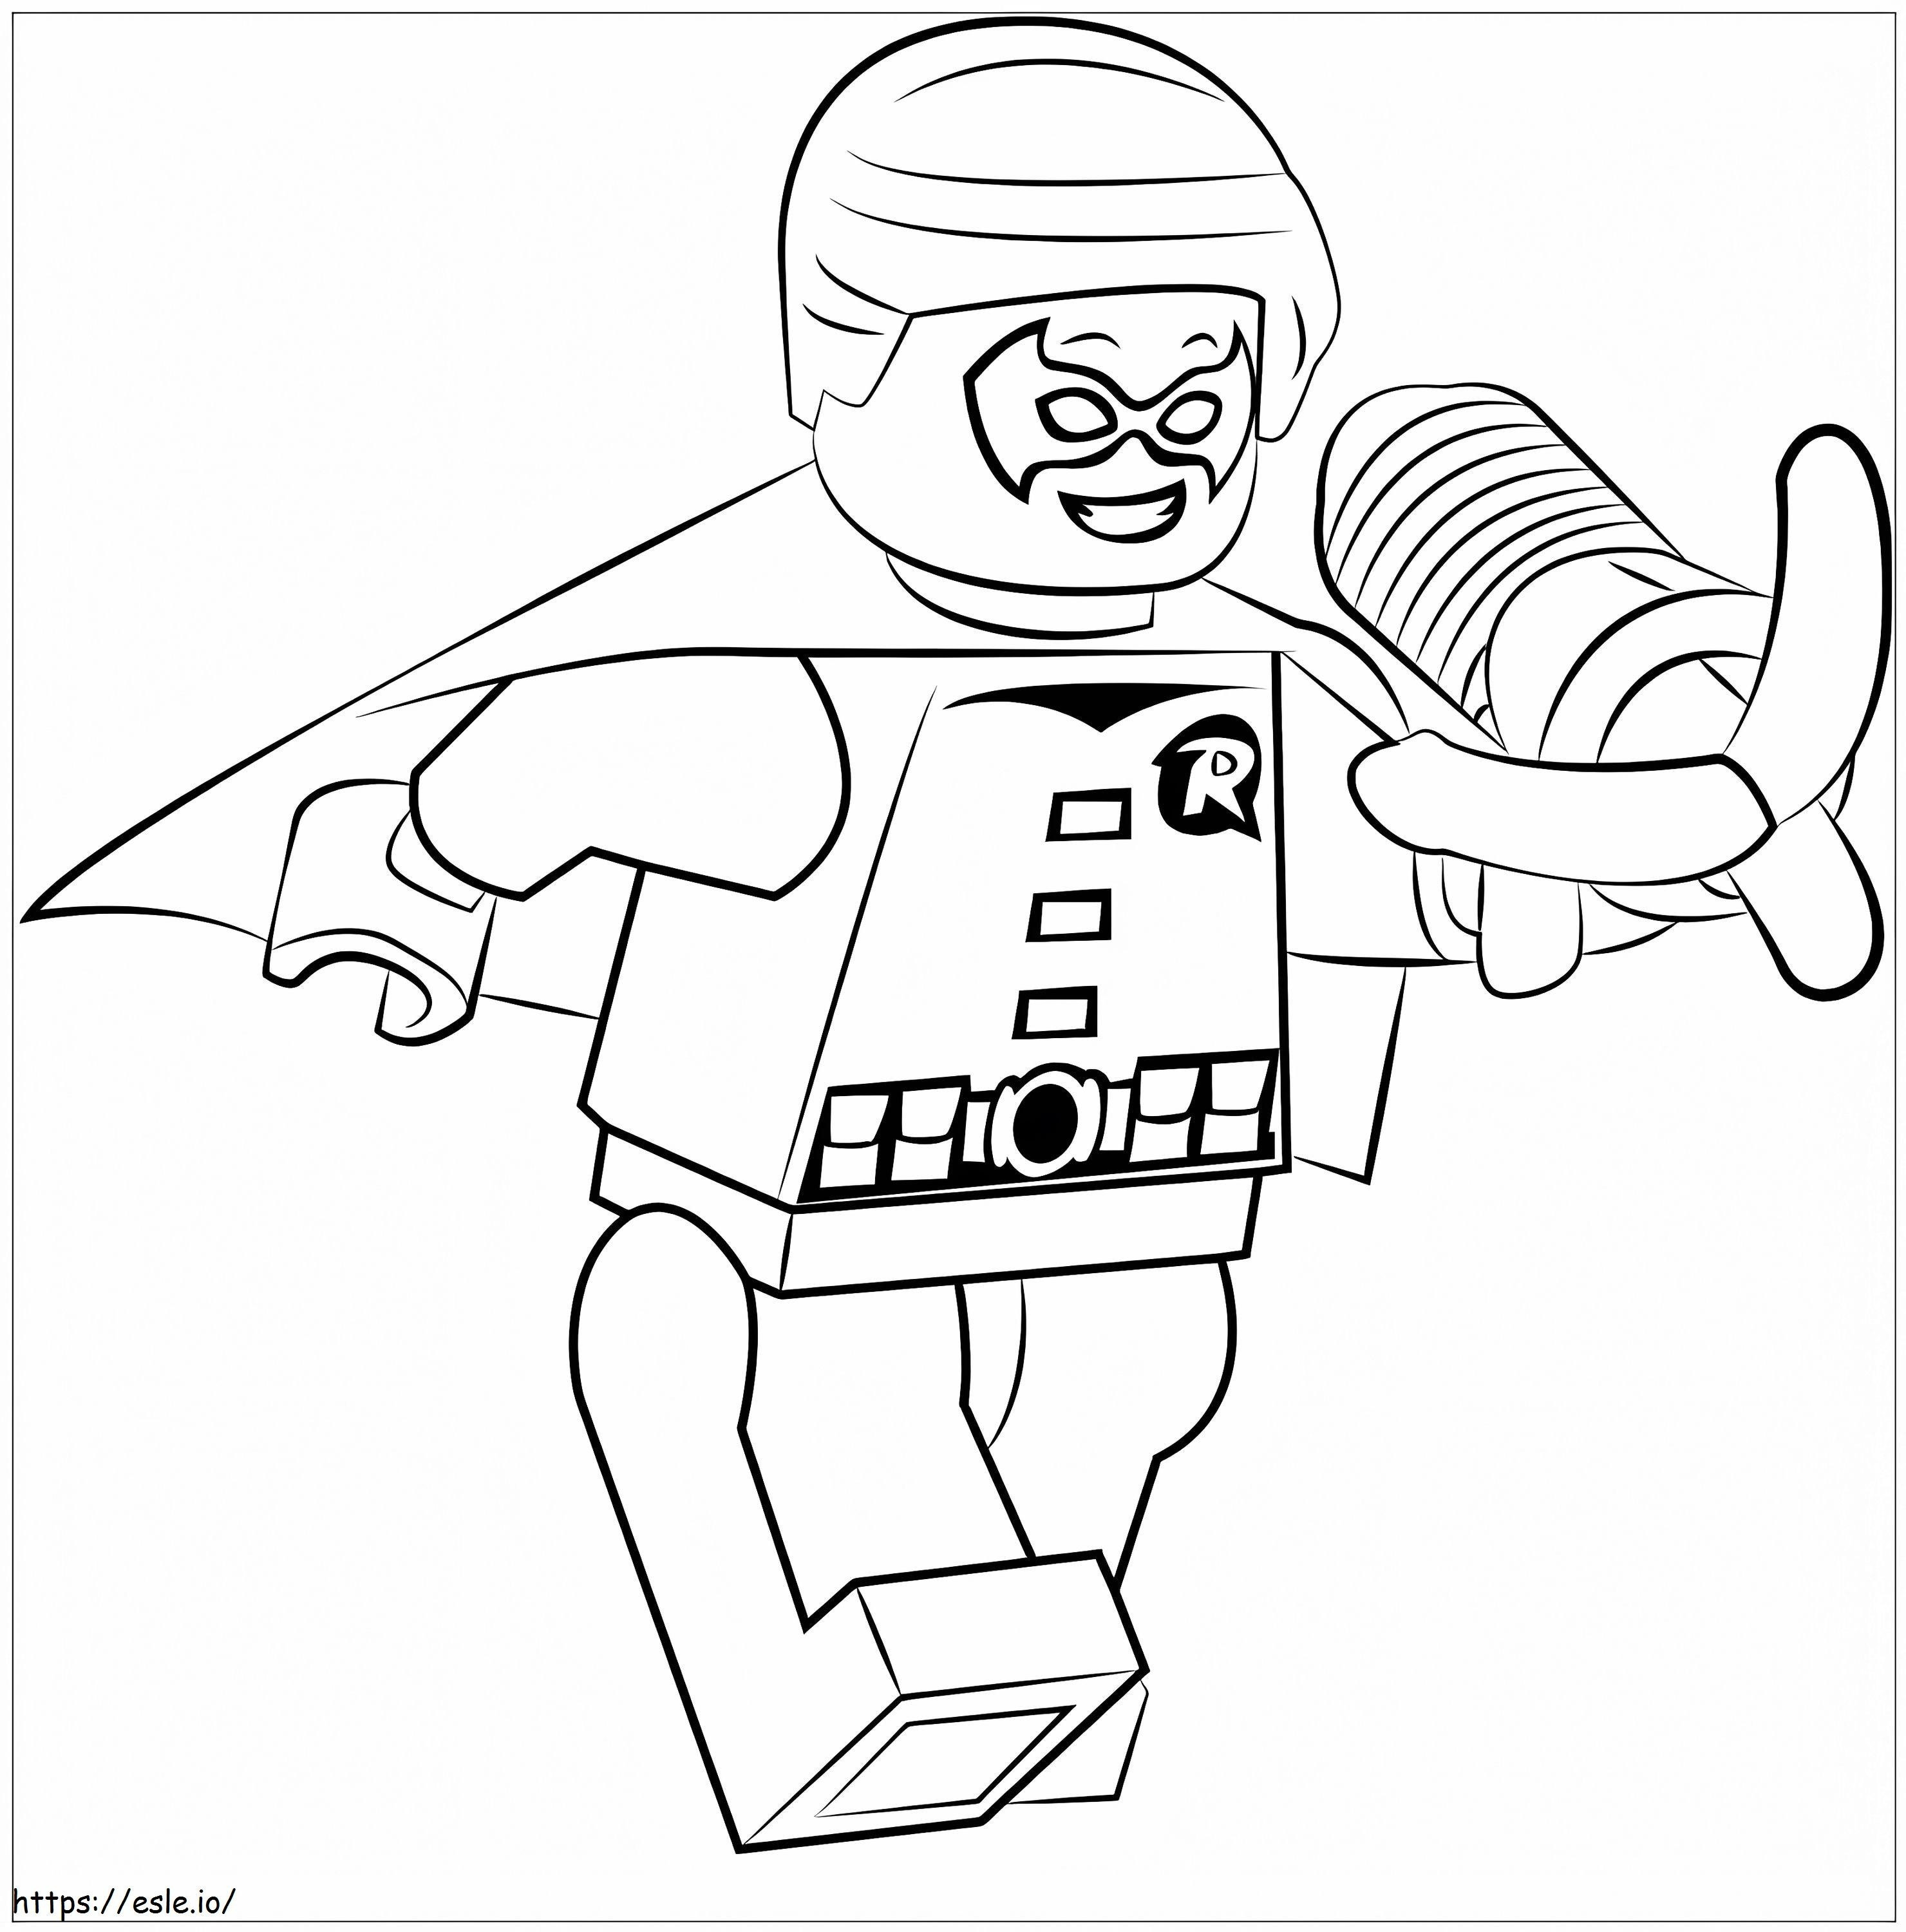 Aksi Lego Robin 1 Gambar Mewarnai